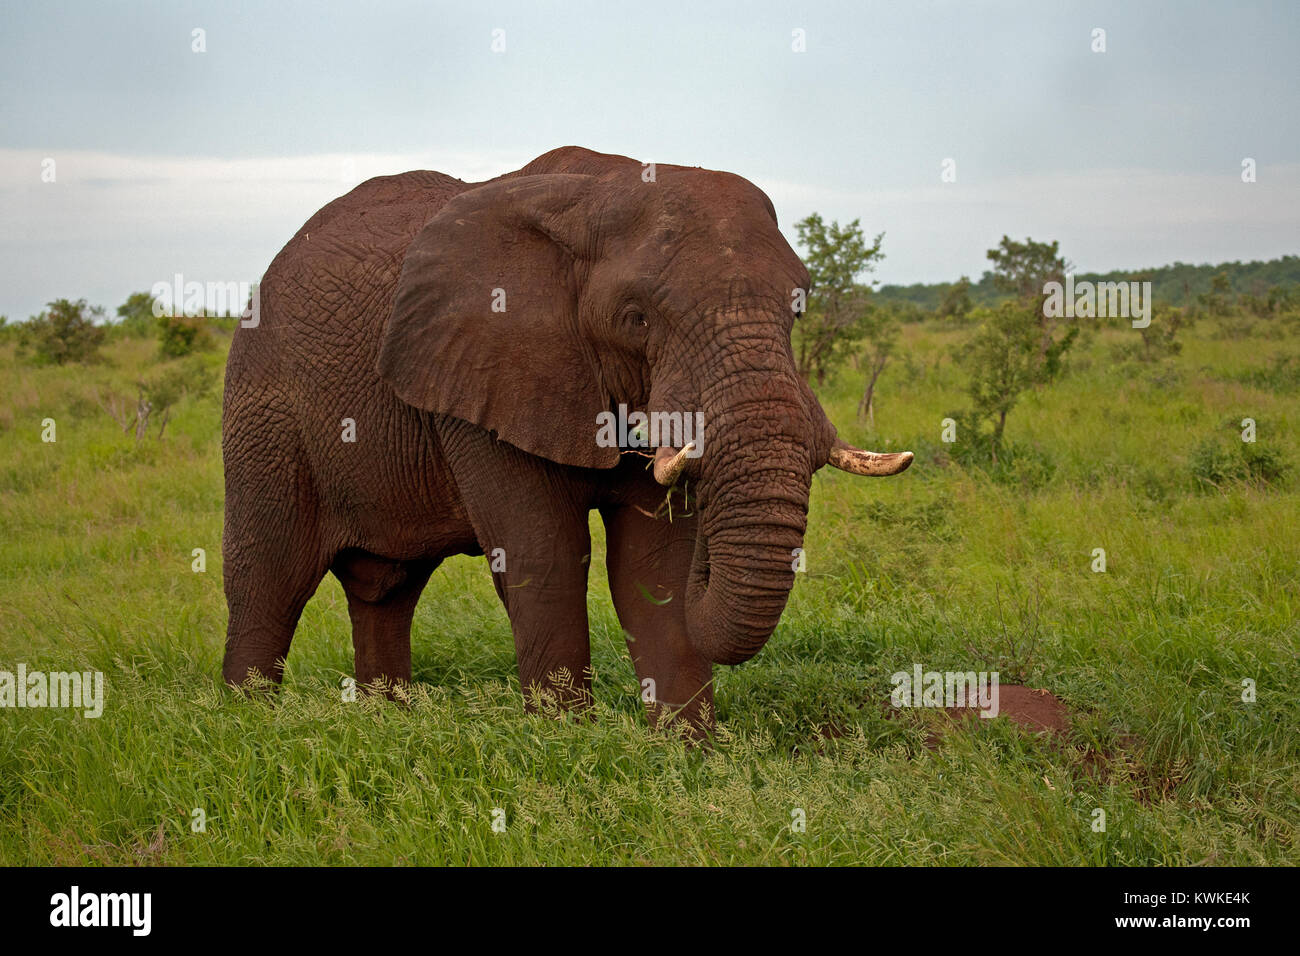 Stier Afrikanischer Elefant (Loxodonta africana) in Rot Staub bedeckt, Krüger Nationalpark, Südafrika. Stockfoto